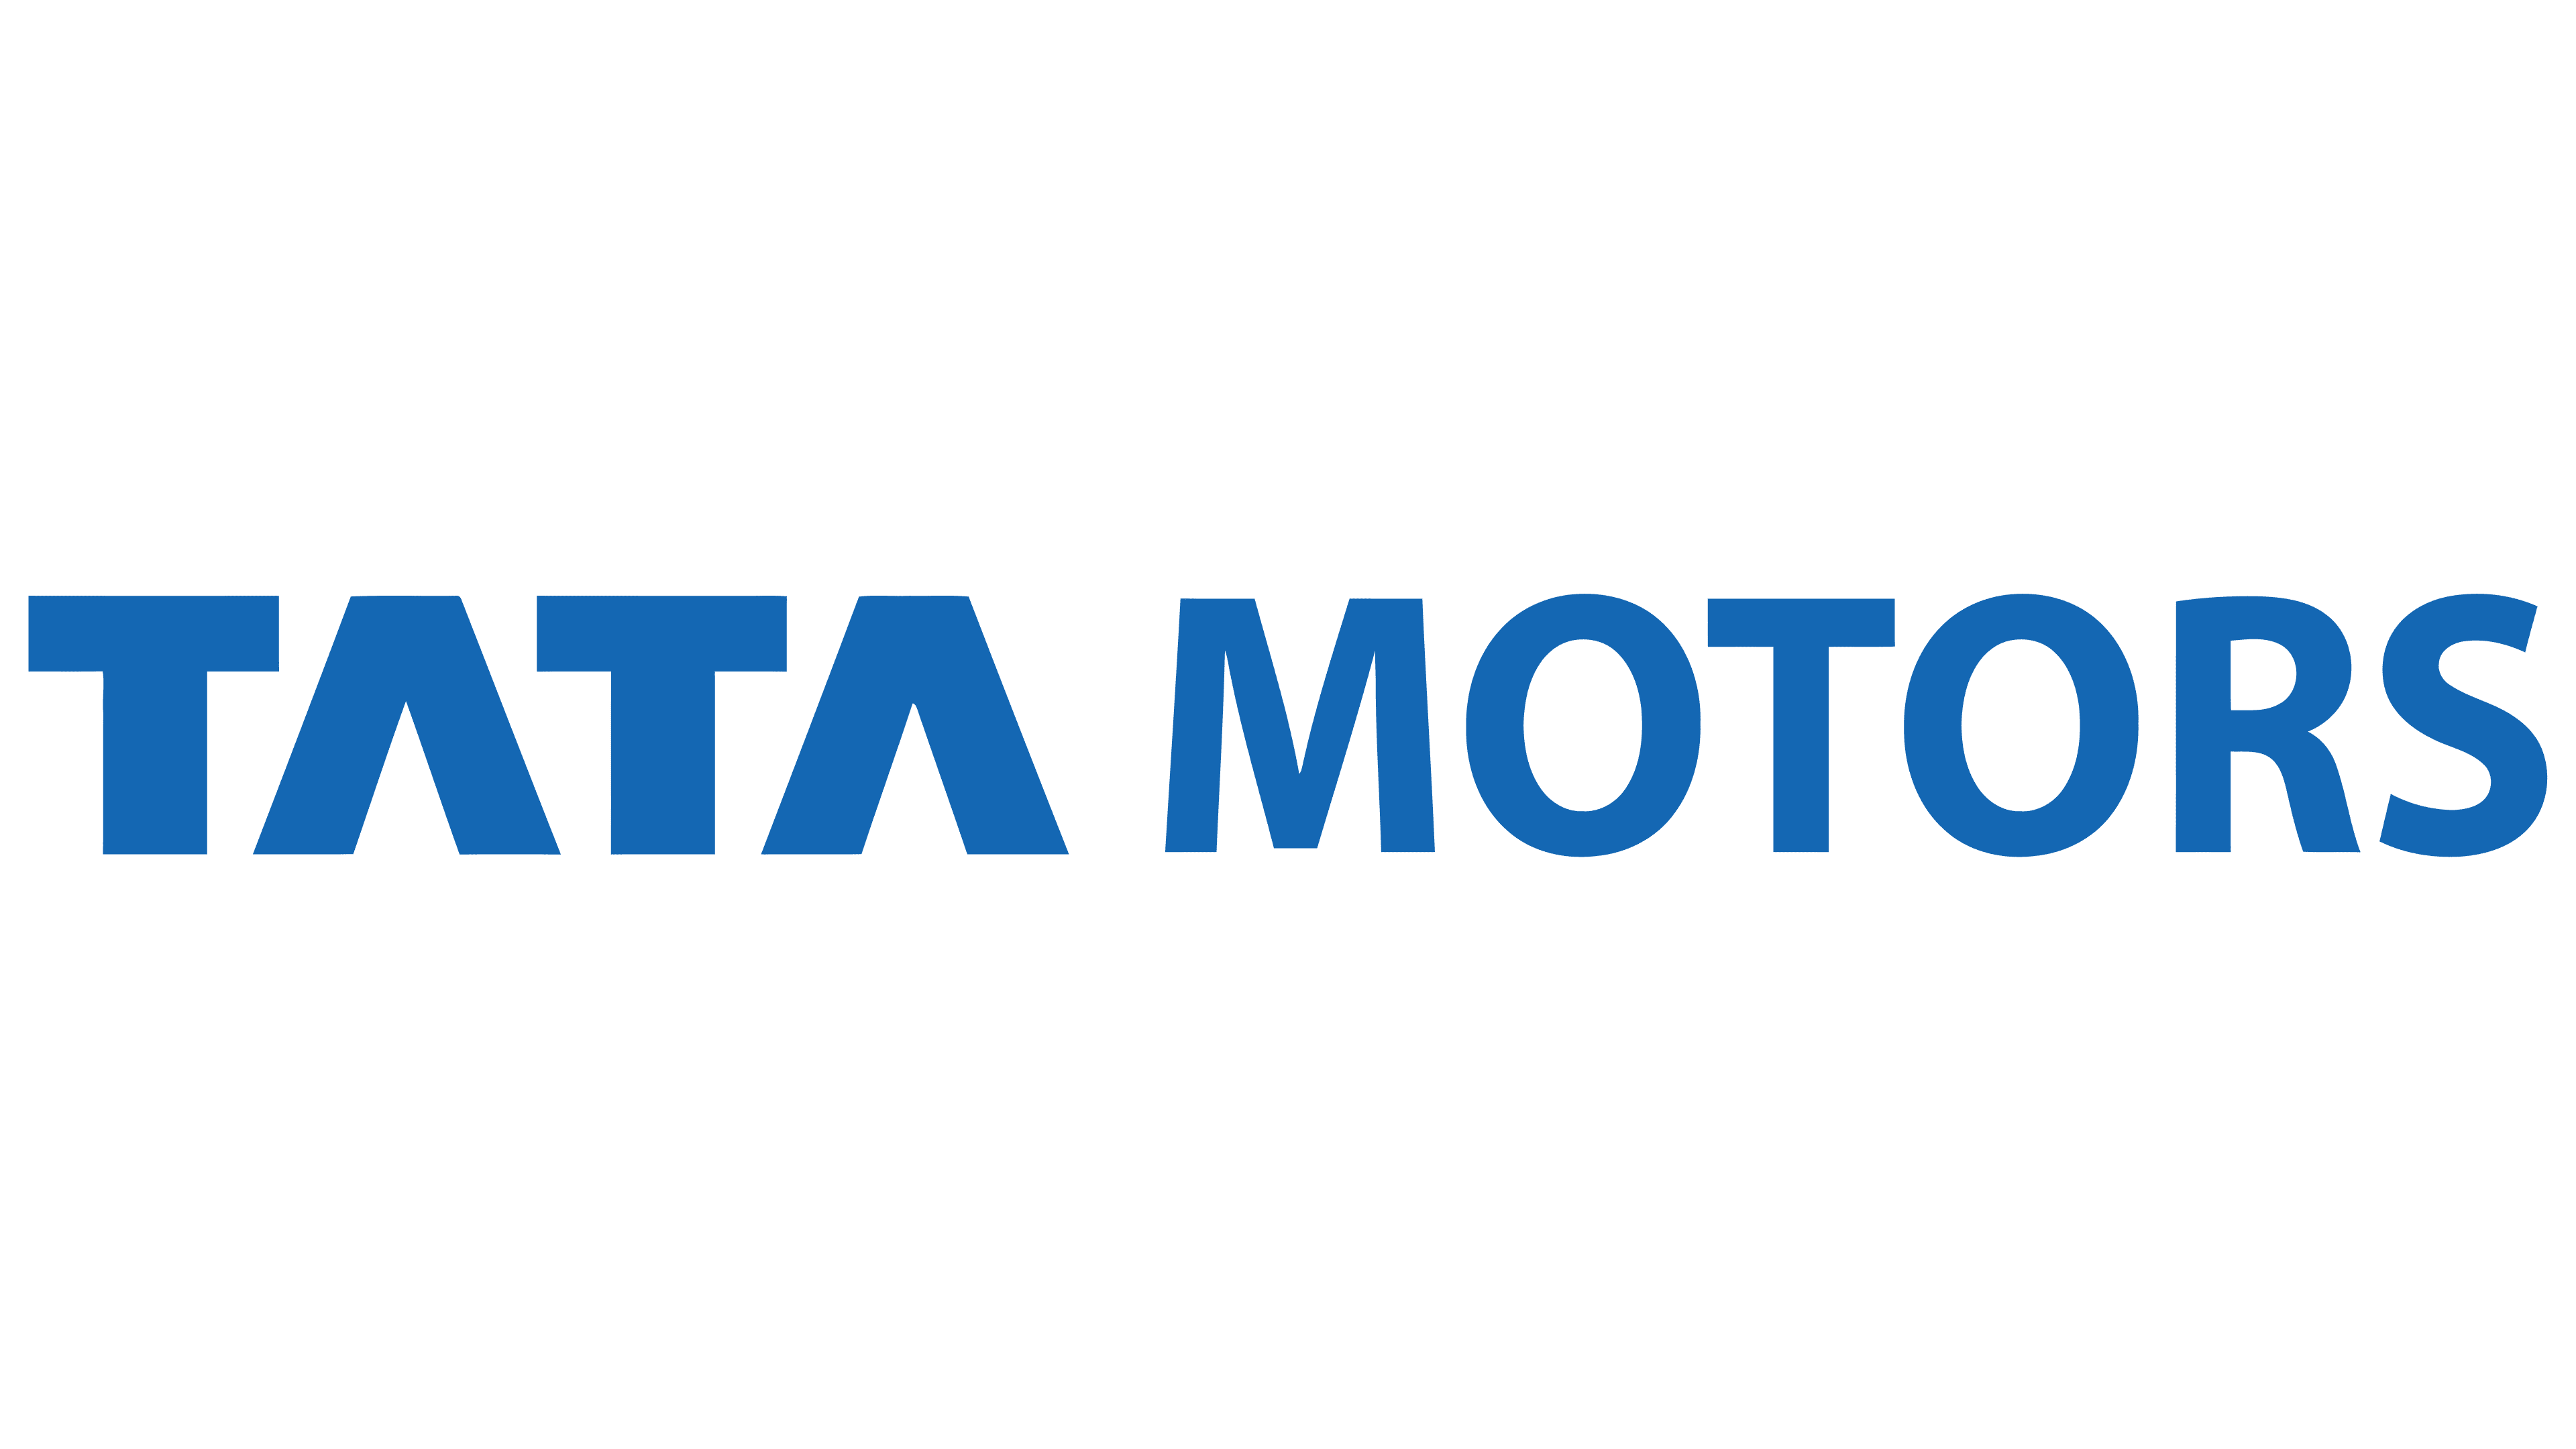 Tata Motors - Evolution | 1991 to 2019 - YouTube